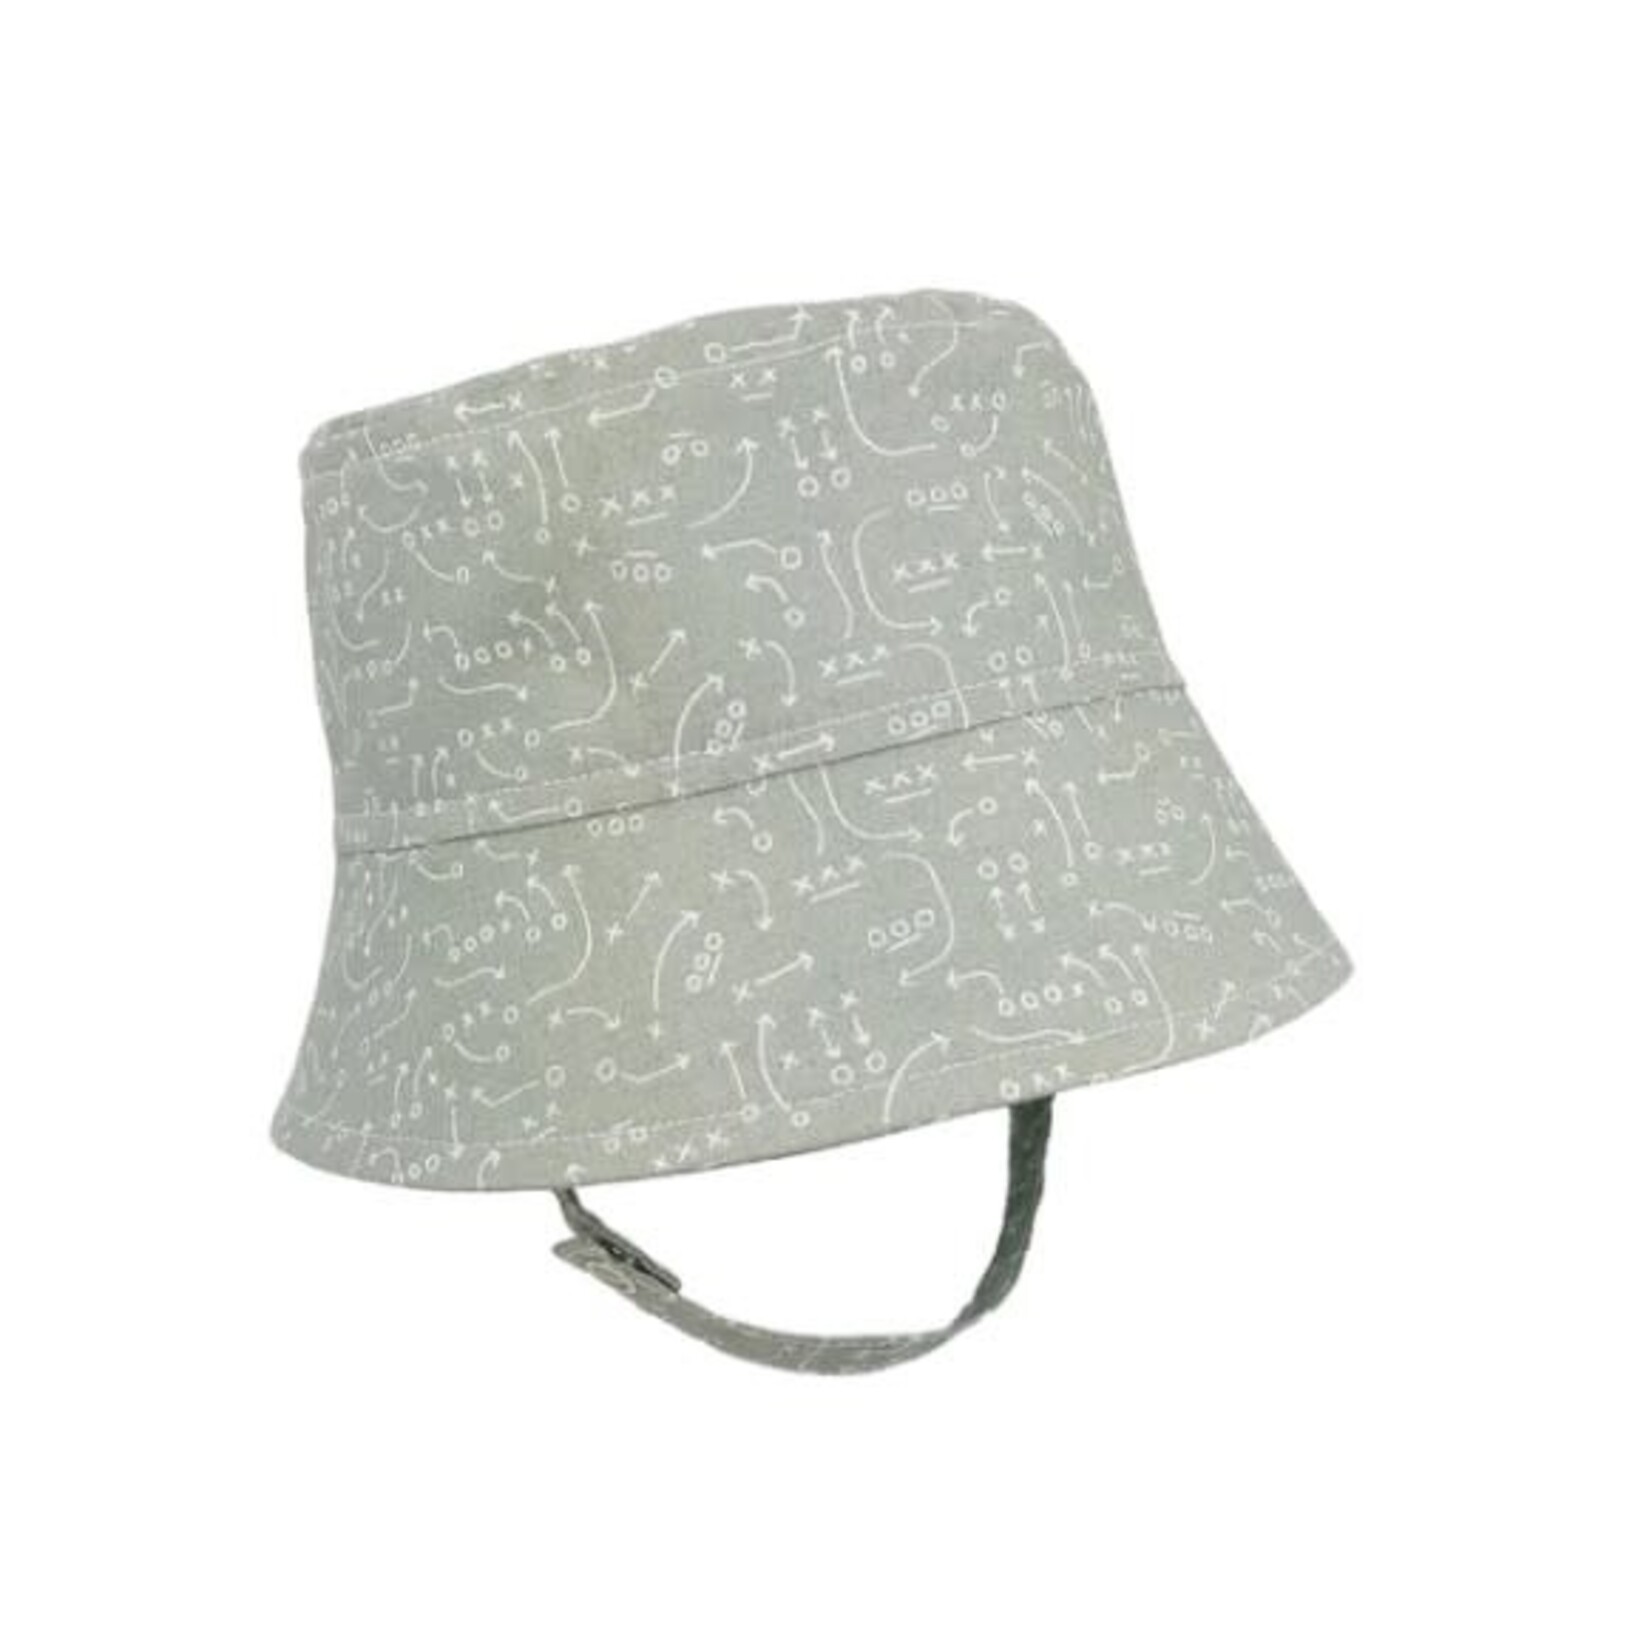 Tirigolo TIRIGOLO - Classic Cotton Adjustable Summer Hat - Directions (grey)